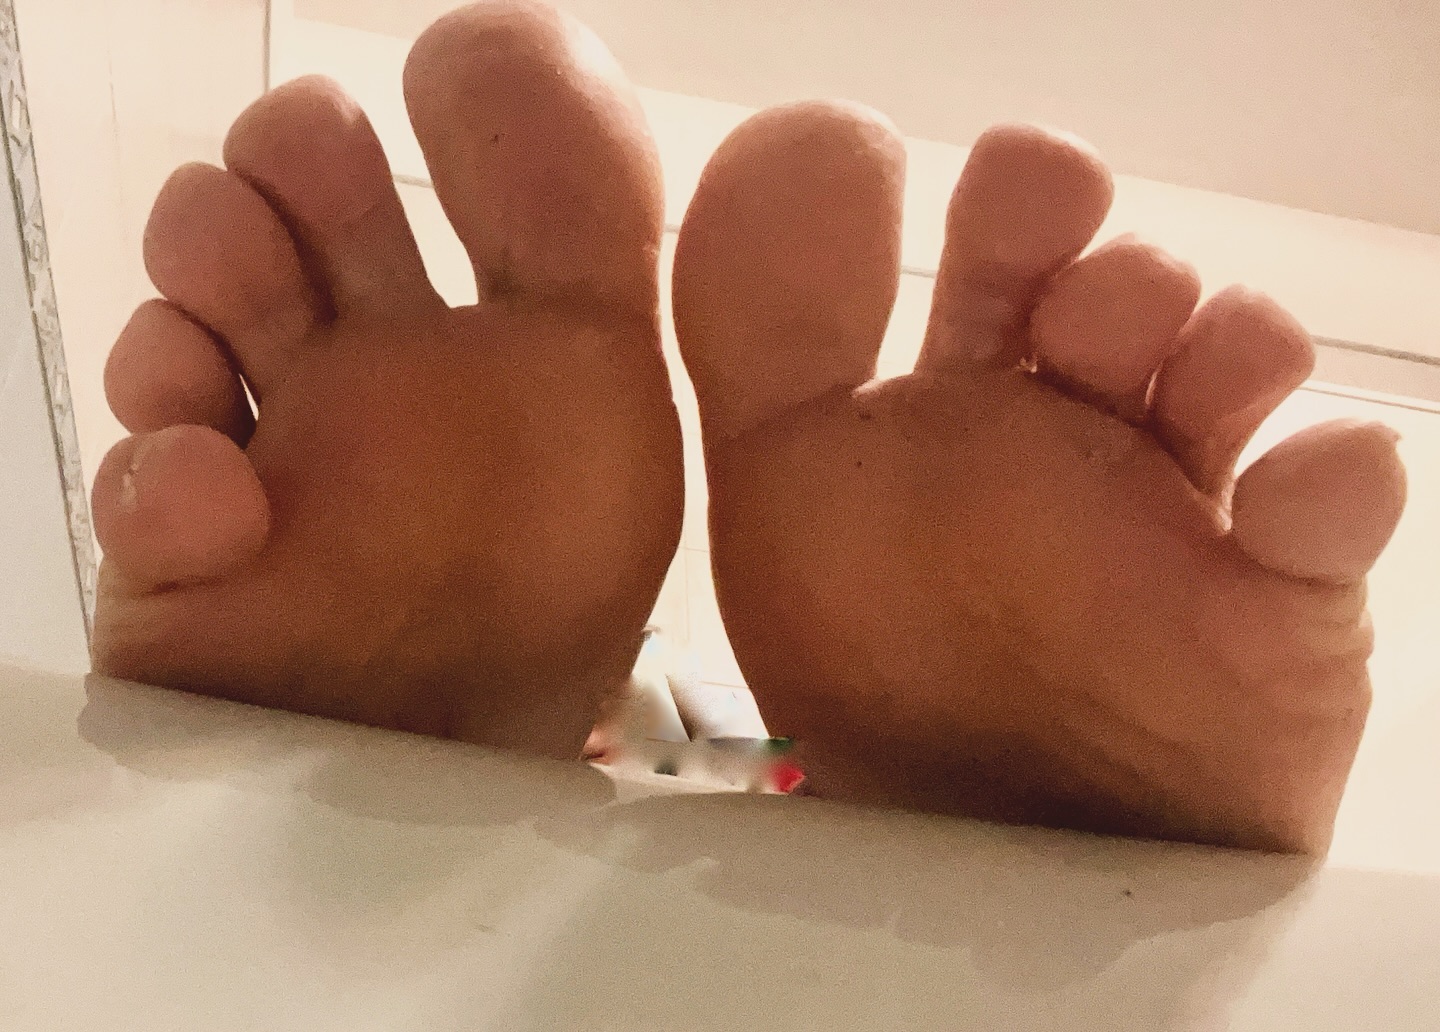 Feet and Toes!

#italianfeet #piediitaliani #piedistrani #feetgram #feetlover #feetpic #feetjob #feetnails #barefoot #backseat #cutefeet #beautifulsoles #solesfeet #solesandfeet
#fetishgirl #fetishfeet #toes #oddtoes #wrinlesreduction  #wrinklyfeet